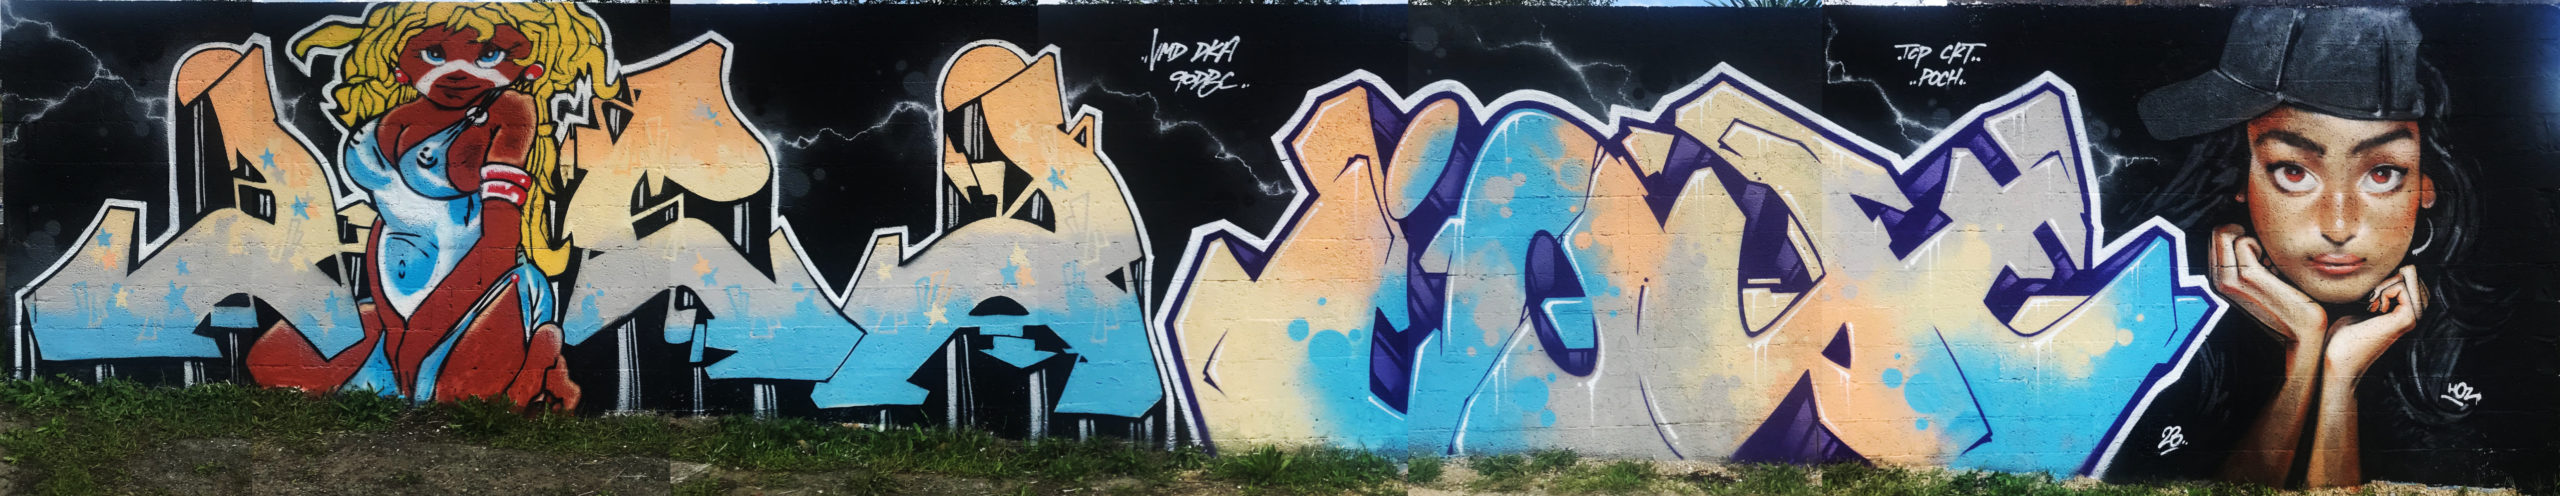 Fresque graffiti JOE-J + IOYE + HOZ